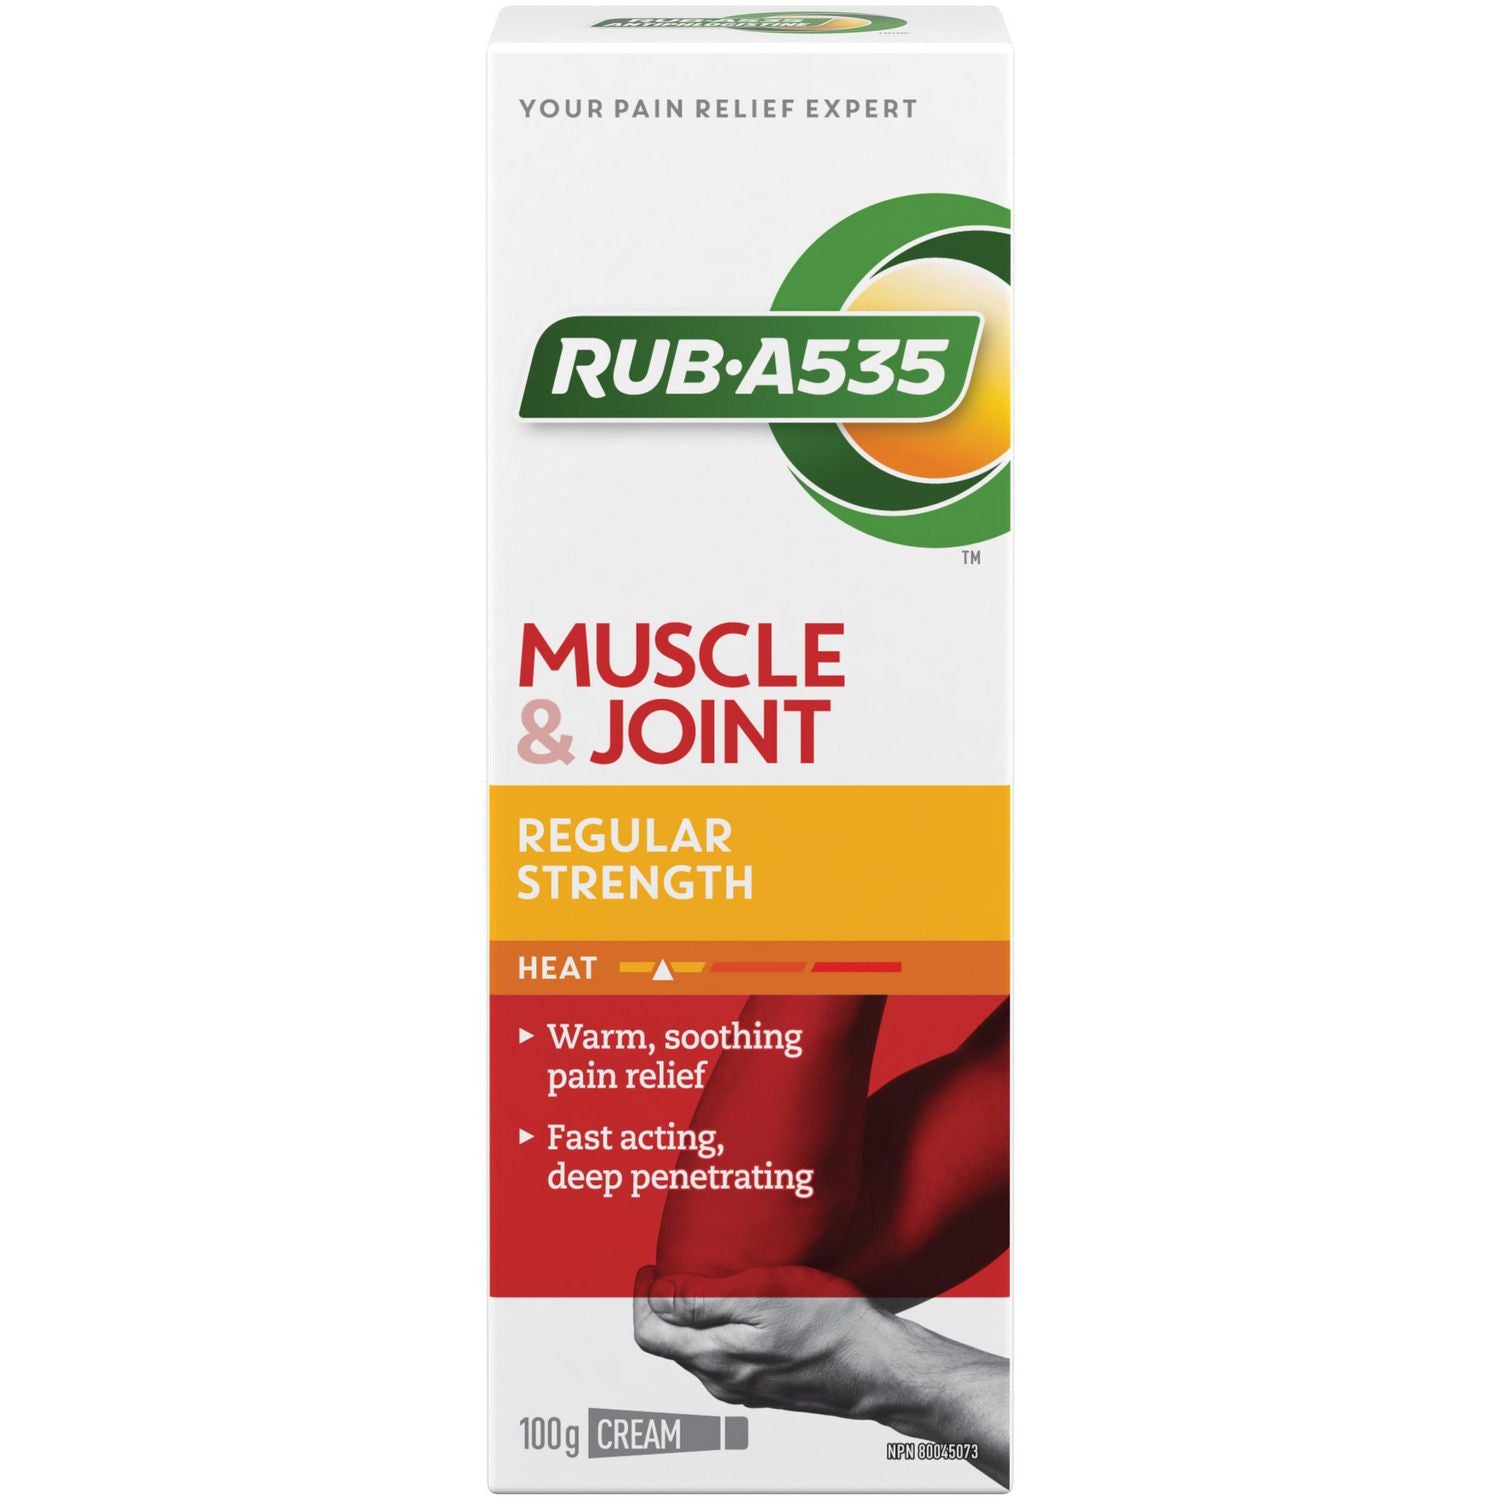 RUB A535 Regular Strength Muscle & Joint Pain Relief Heat Cream